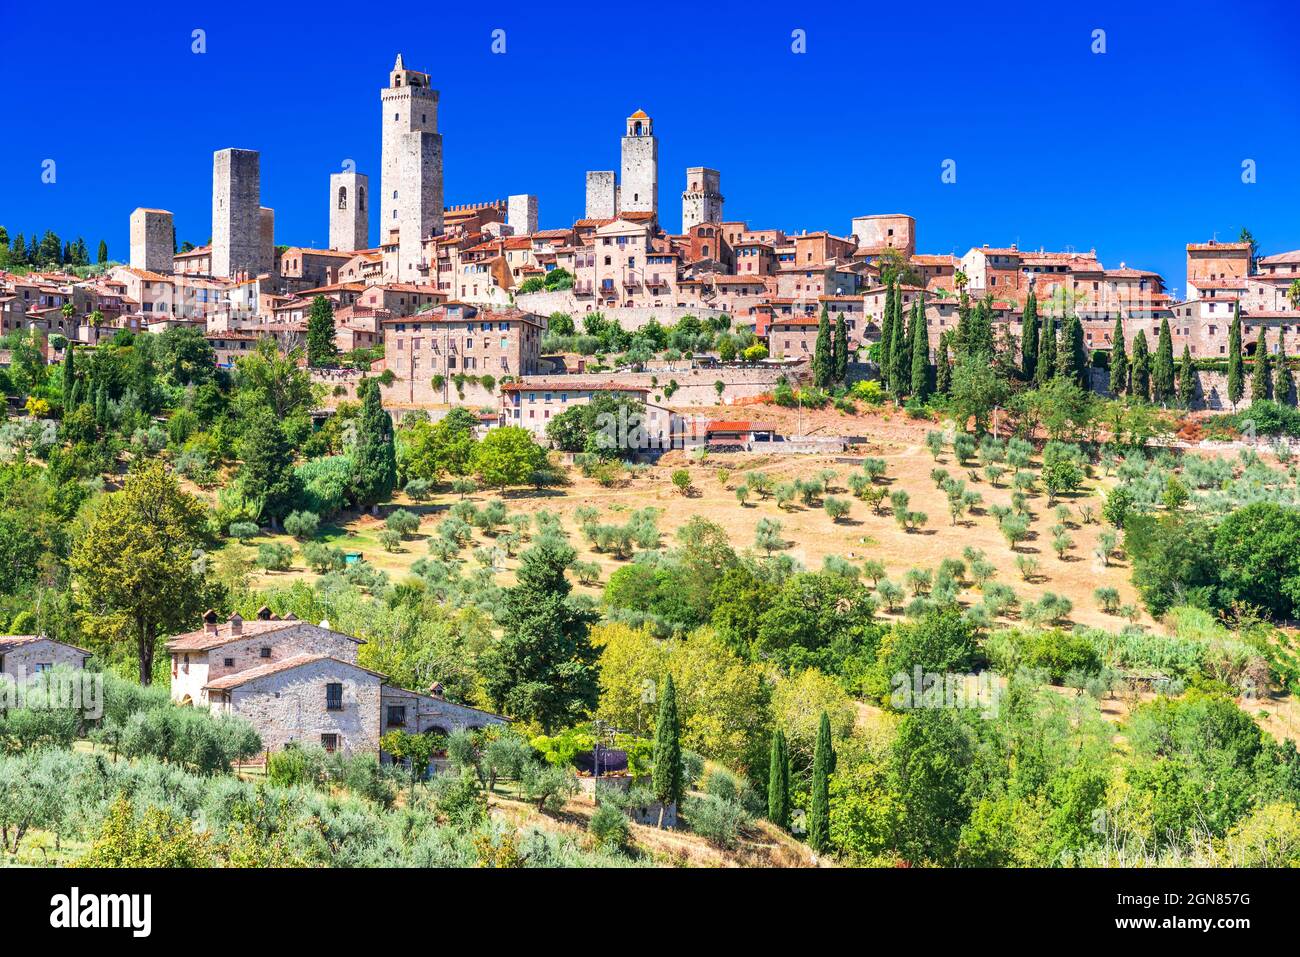 San Gimignano mittelalterliche Stadt Skyline und berühmten Türmen sonnigen Tag. Italienische Olivenbäume im Vordergrund. Toskana, Italien, Europa. Stockfoto